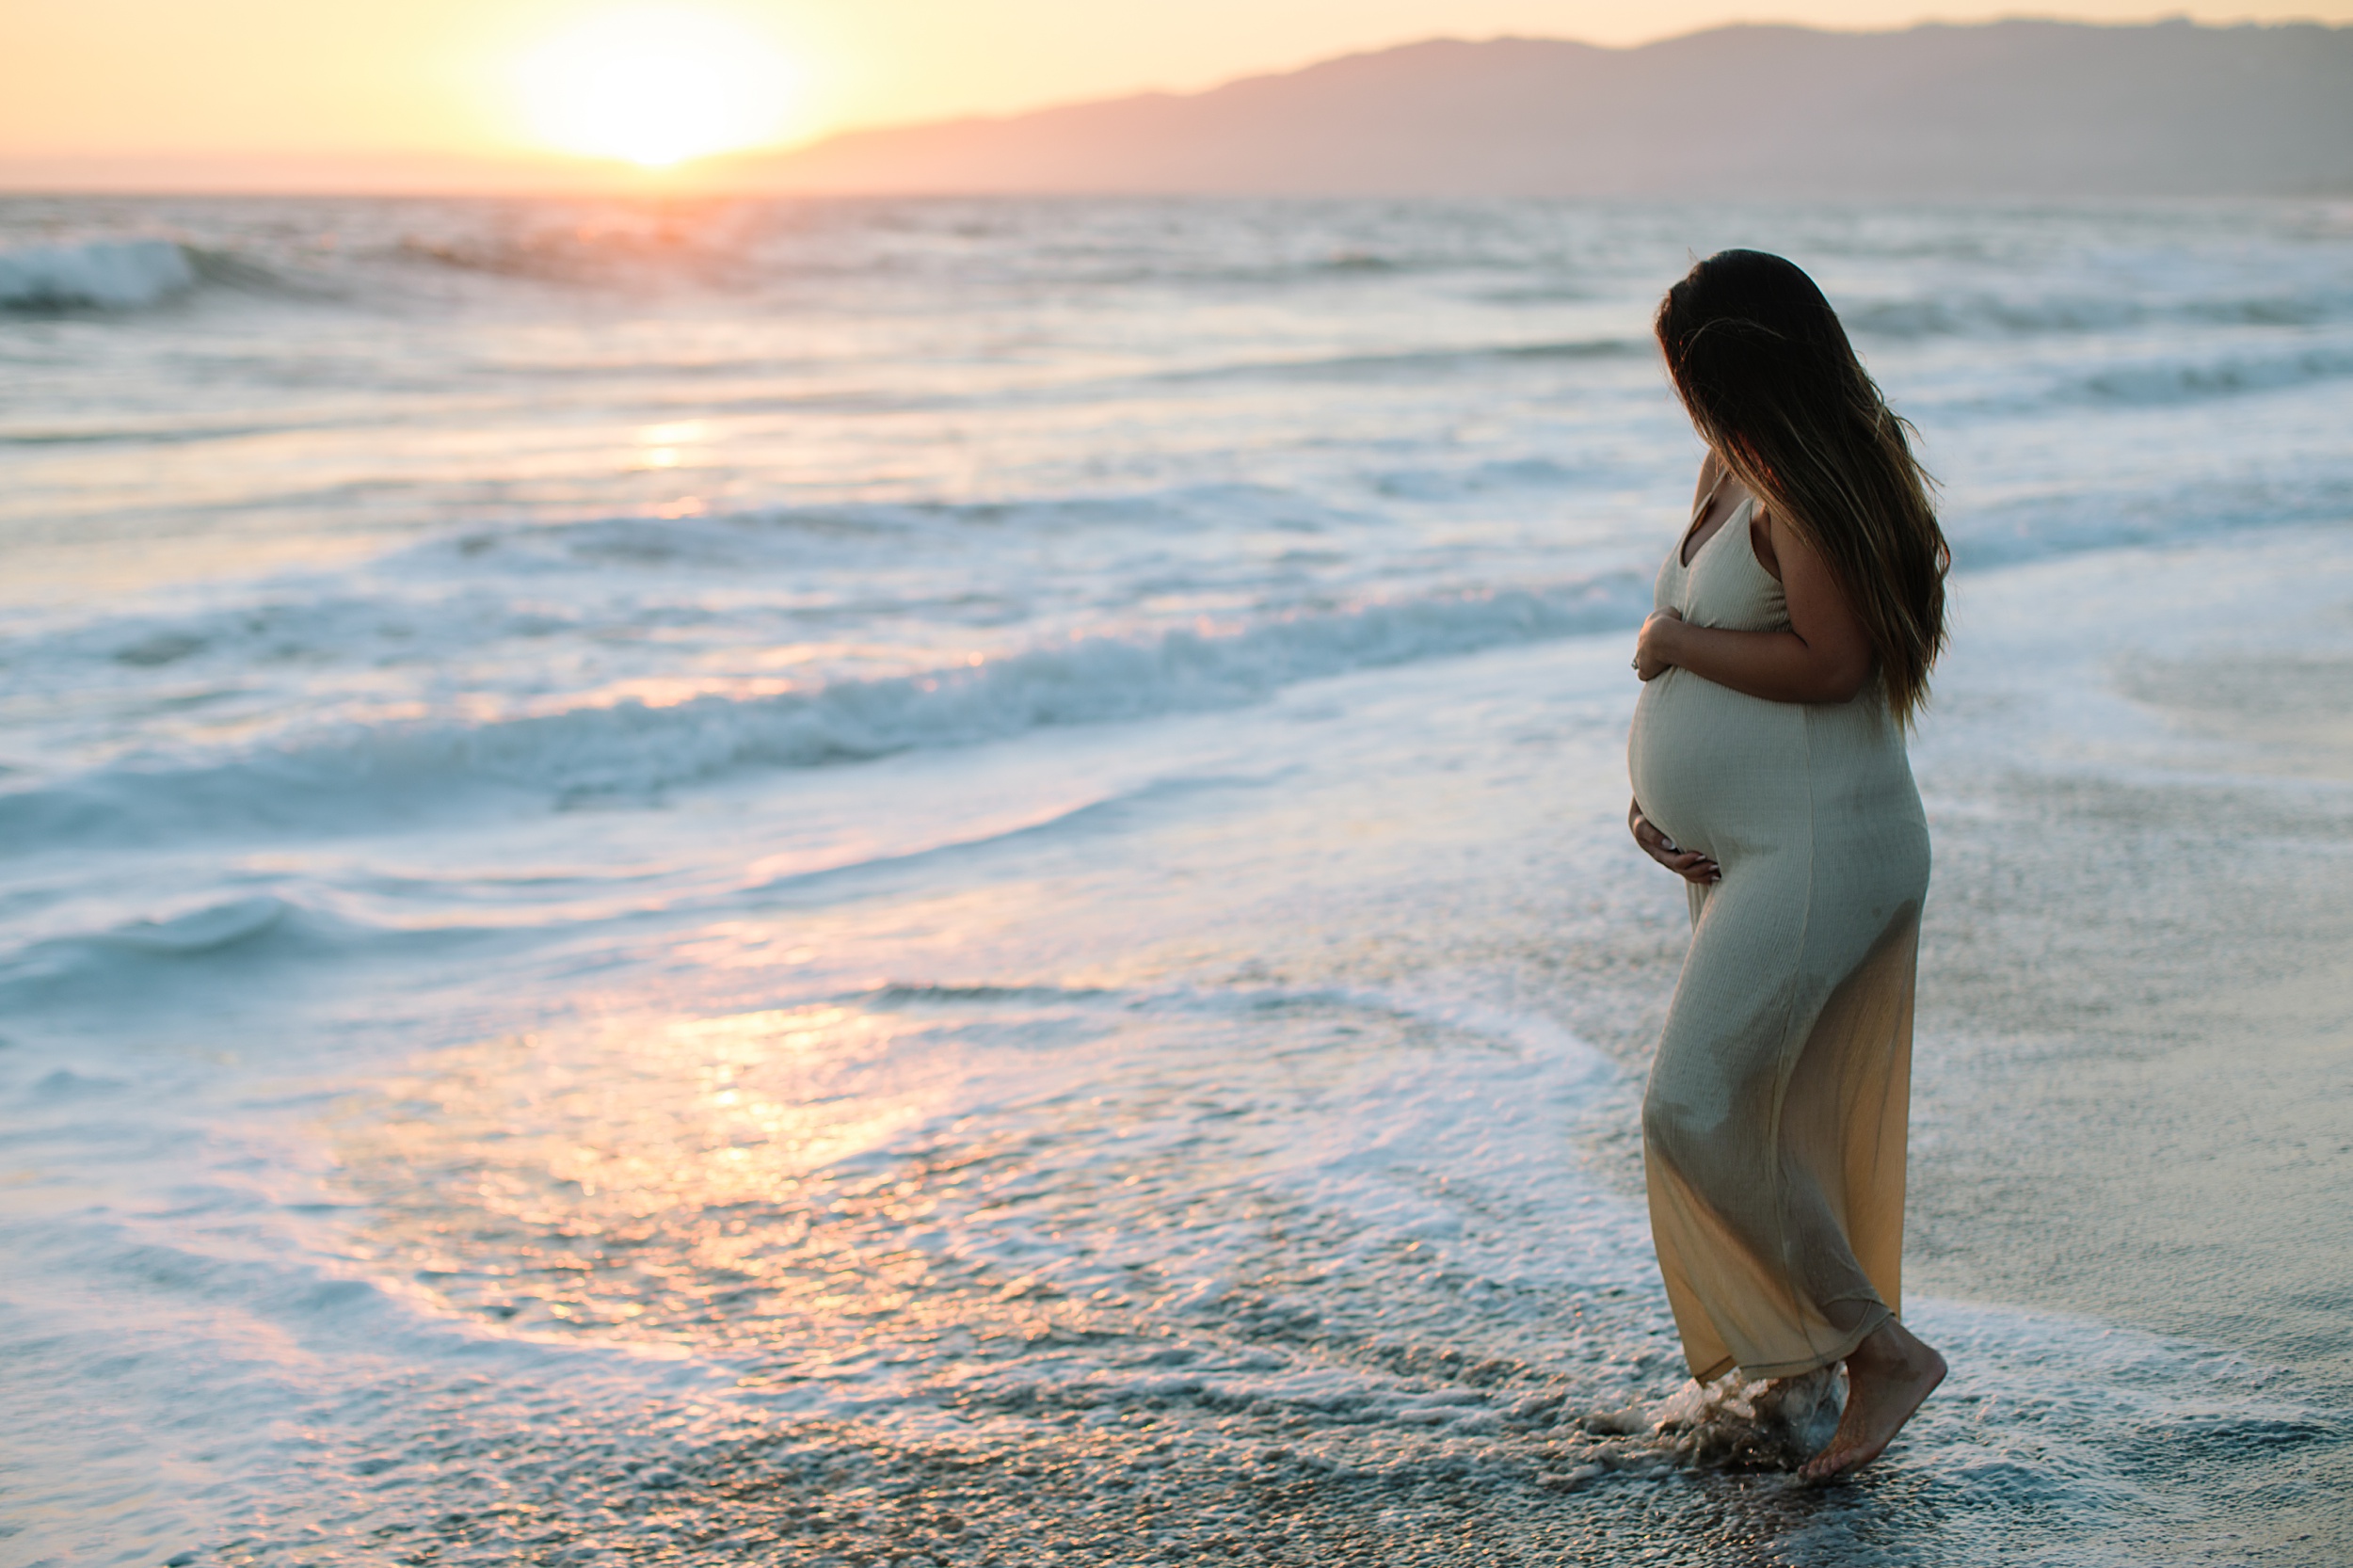 Yuvals-Maternity-Session-43 Breathtaking Maternity Beach Photoshoot with Family in Malibu, CA